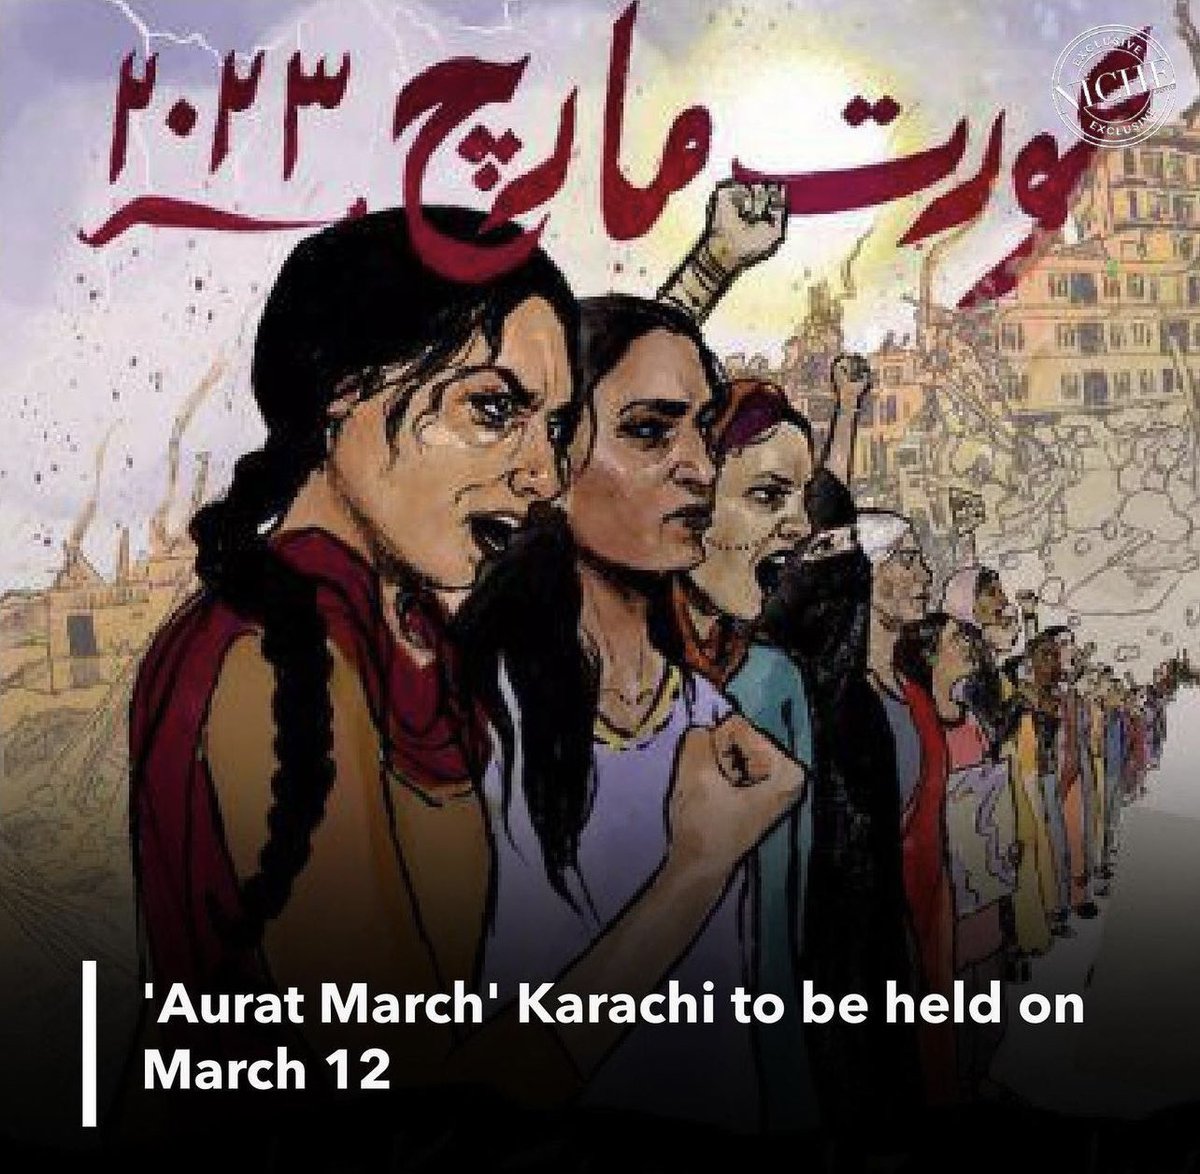 #March08 #InternationalWomansDay #womenempowerment #endpatriarchy 

#AuratMarch2023 #Karachi